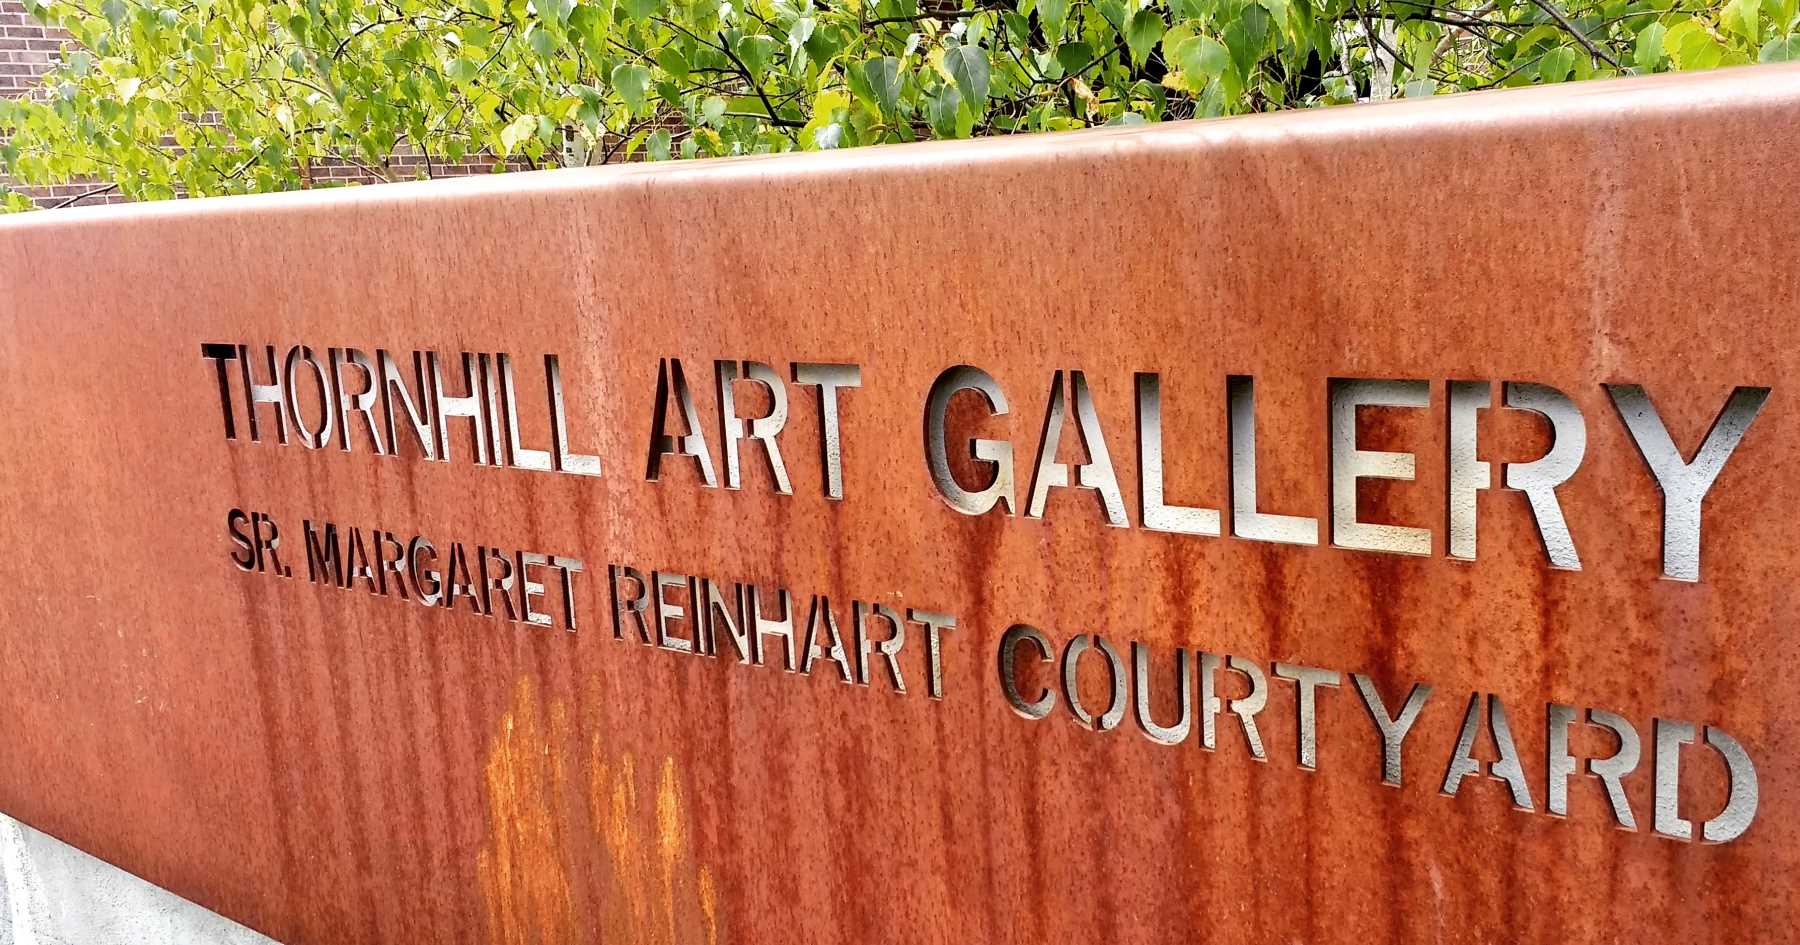 Thornhill Art Gallery Sister Margaret Reinhart Courtyard sign